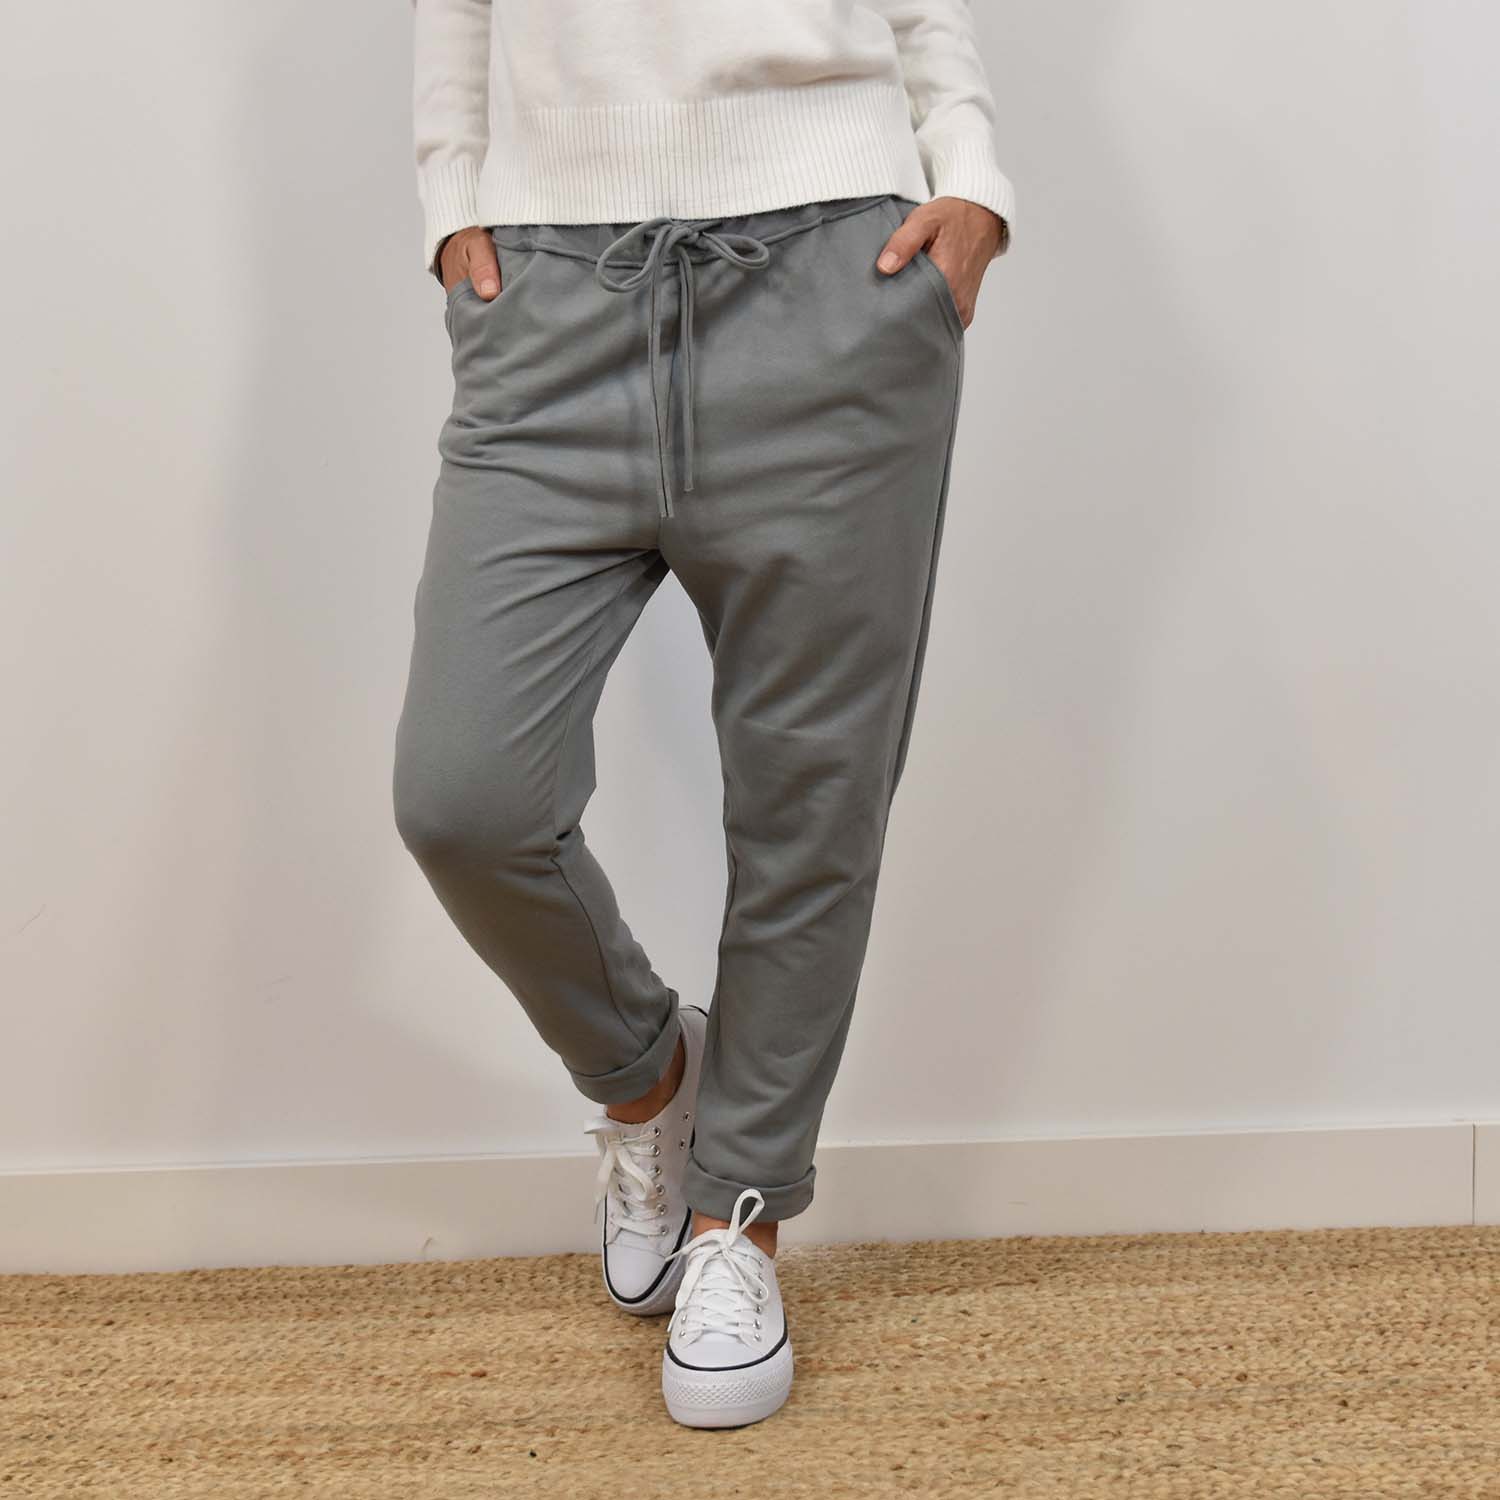 Grey jogger ribete pants